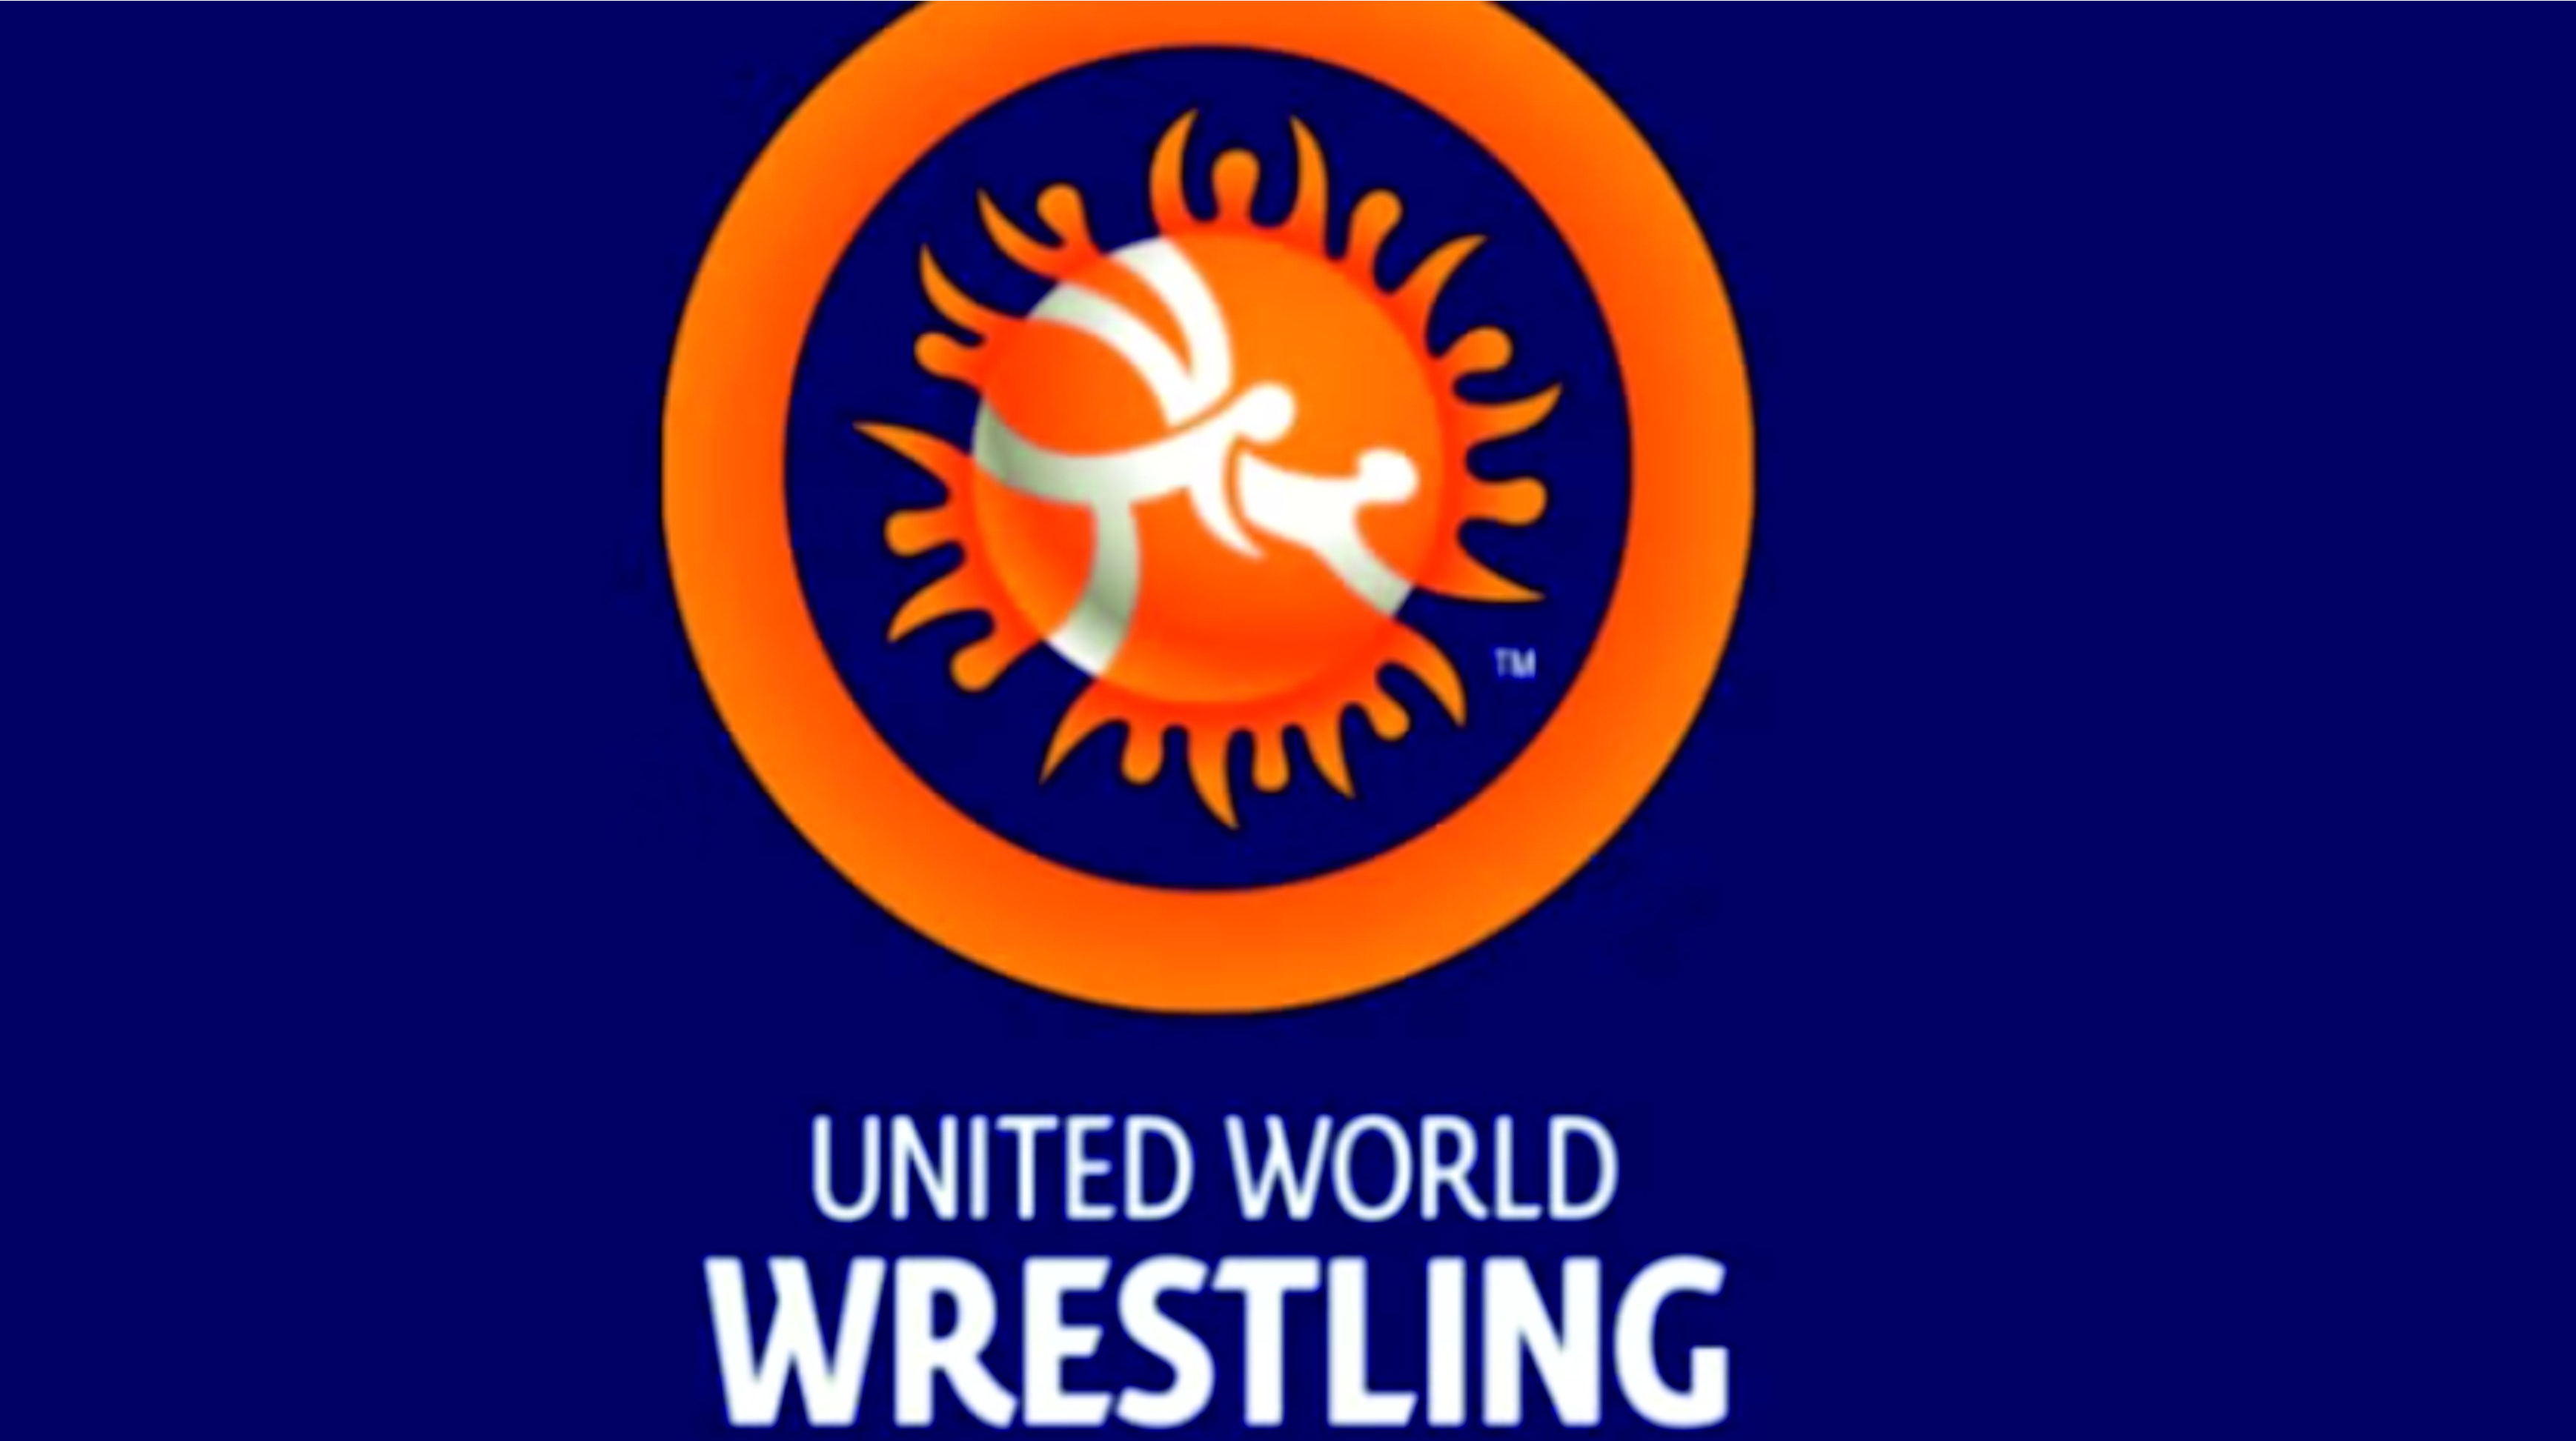 WFI Suspension: यूनाइटेड वर्ल्ड रेसलिंग का बड़ा निर्णय, भारतीय कुश्ती महासंघ की सदस्यता बहाल